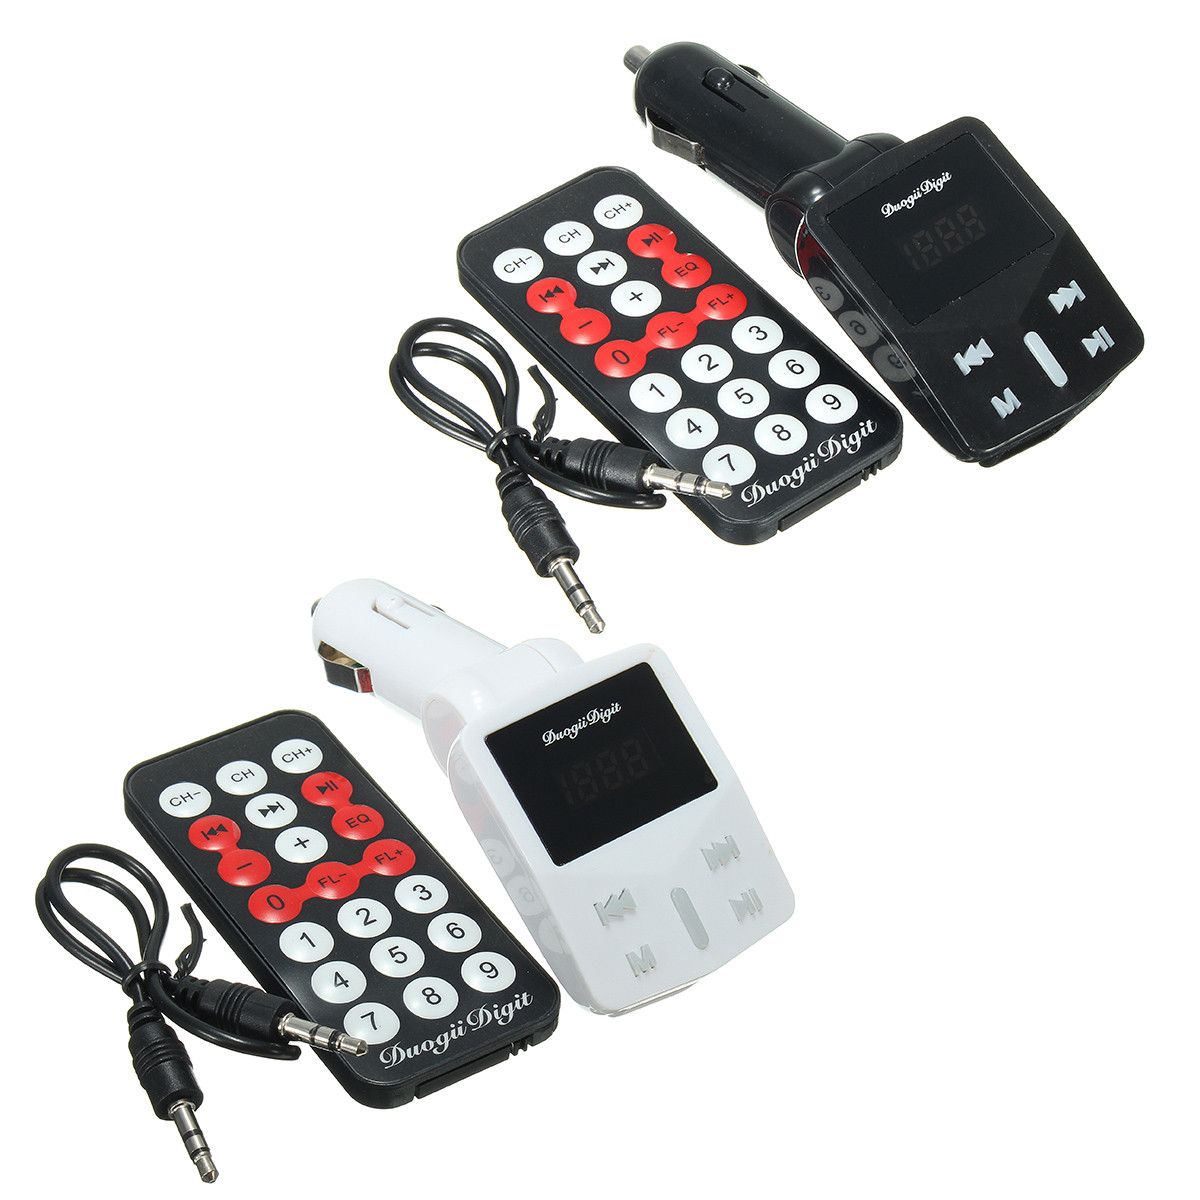 12Prime-LED-Display-Car-Kit-MP3-Player-FM-Transmitter-Modulator-MicroSD-Car-Charger-For-iphoneX-Sams-1235930